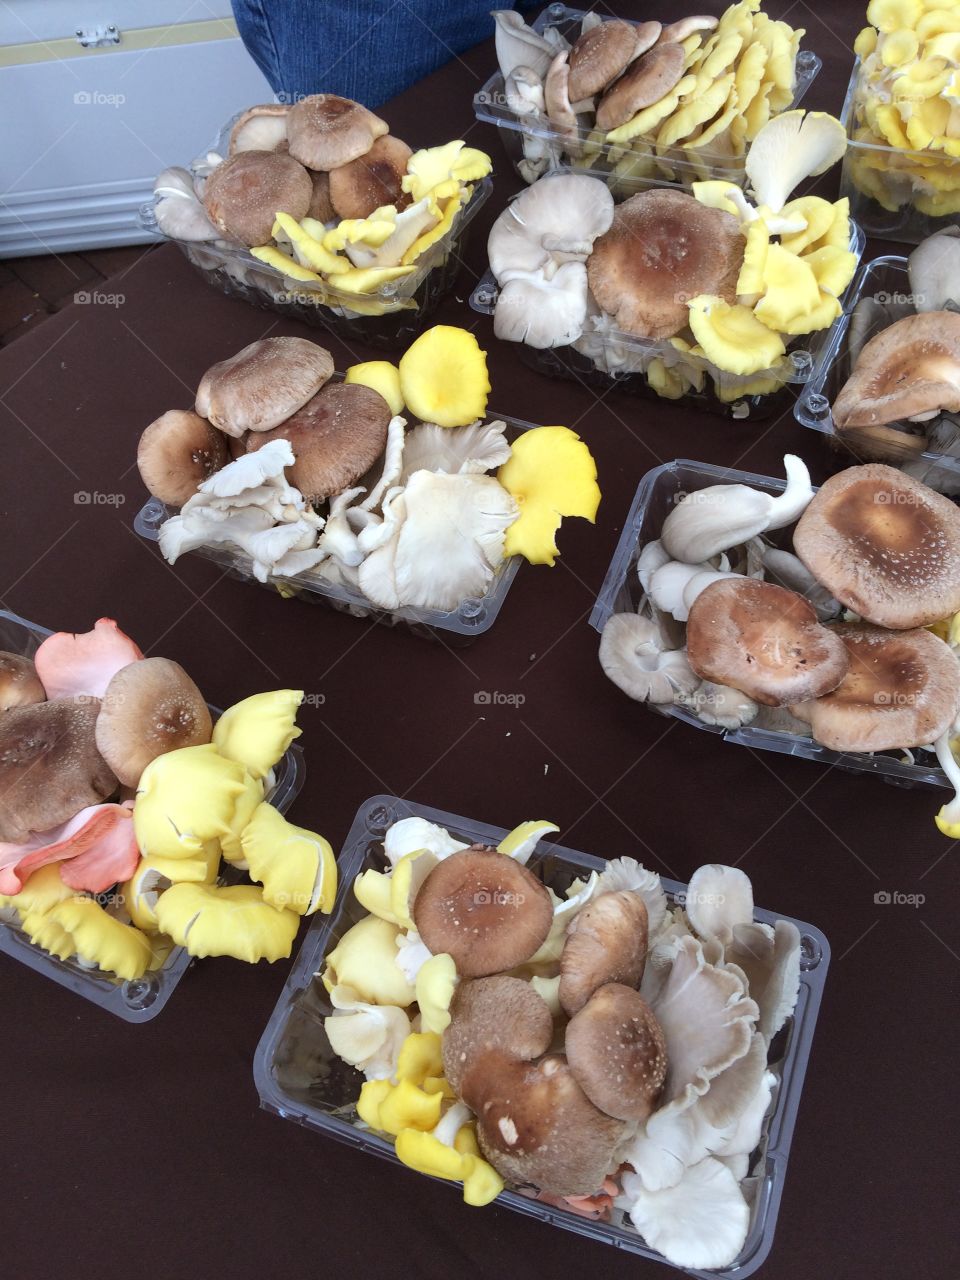 
Mushroom varieties at Madison, Wisconsin, weekly farmers market. 